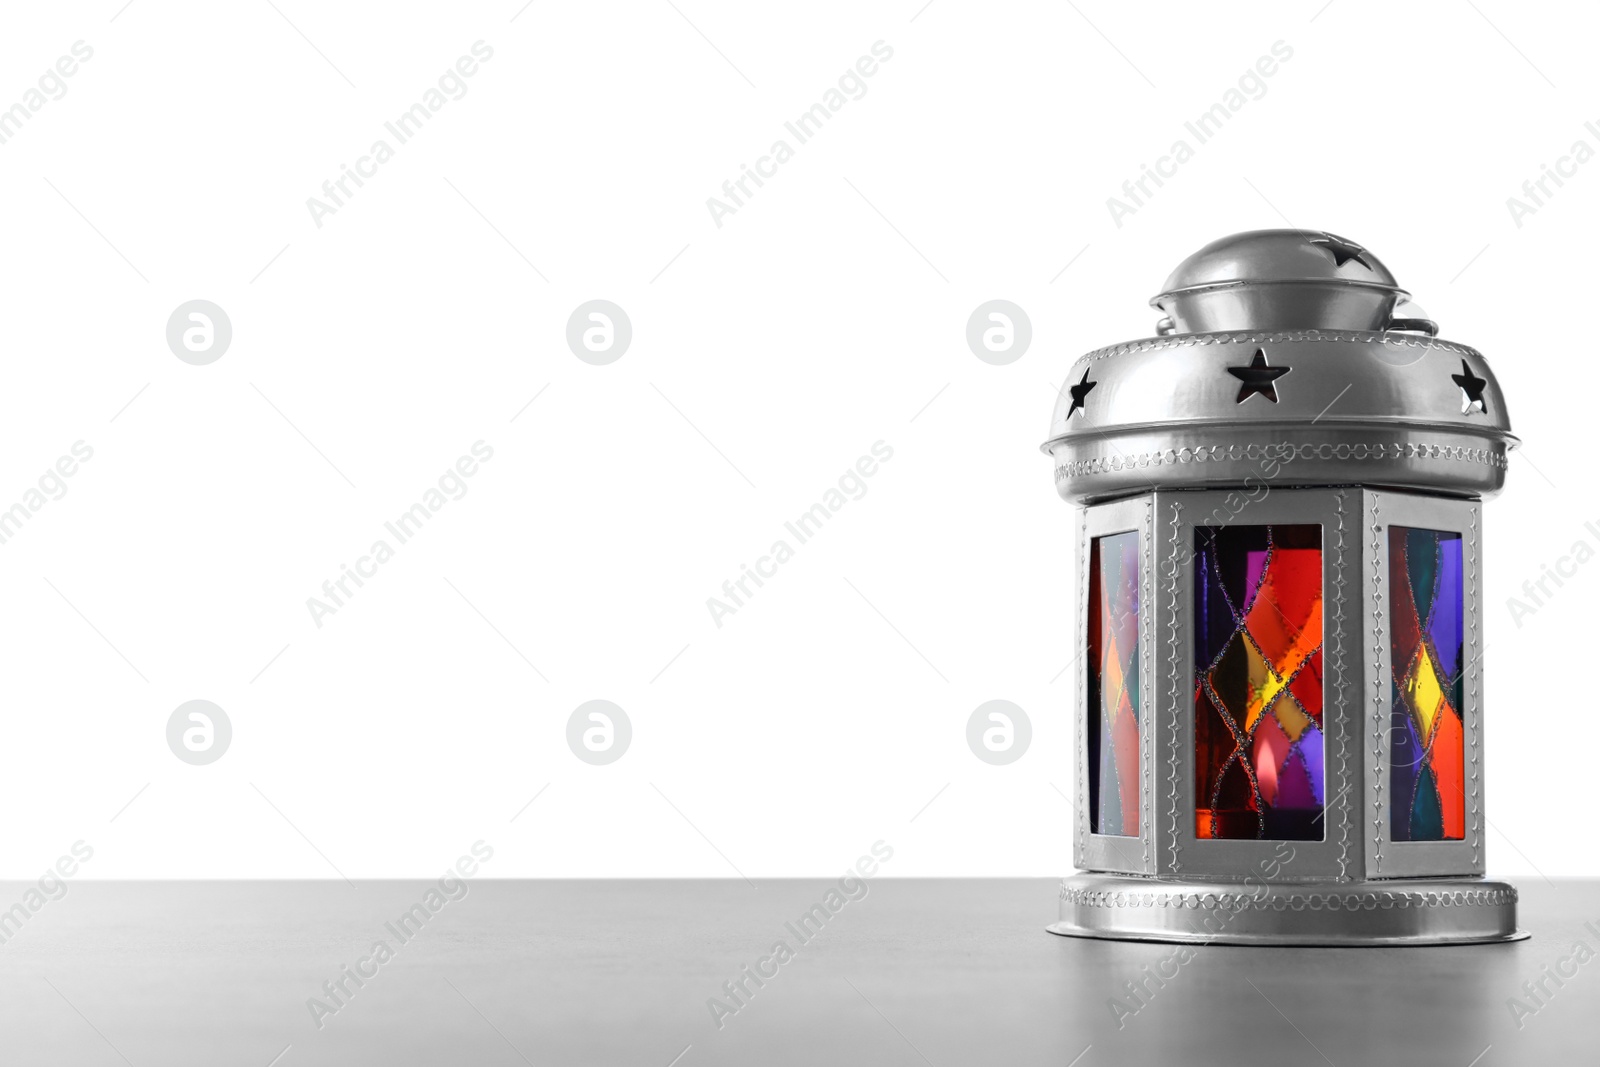 Photo of Decorative Arabic lantern on grey table against white background